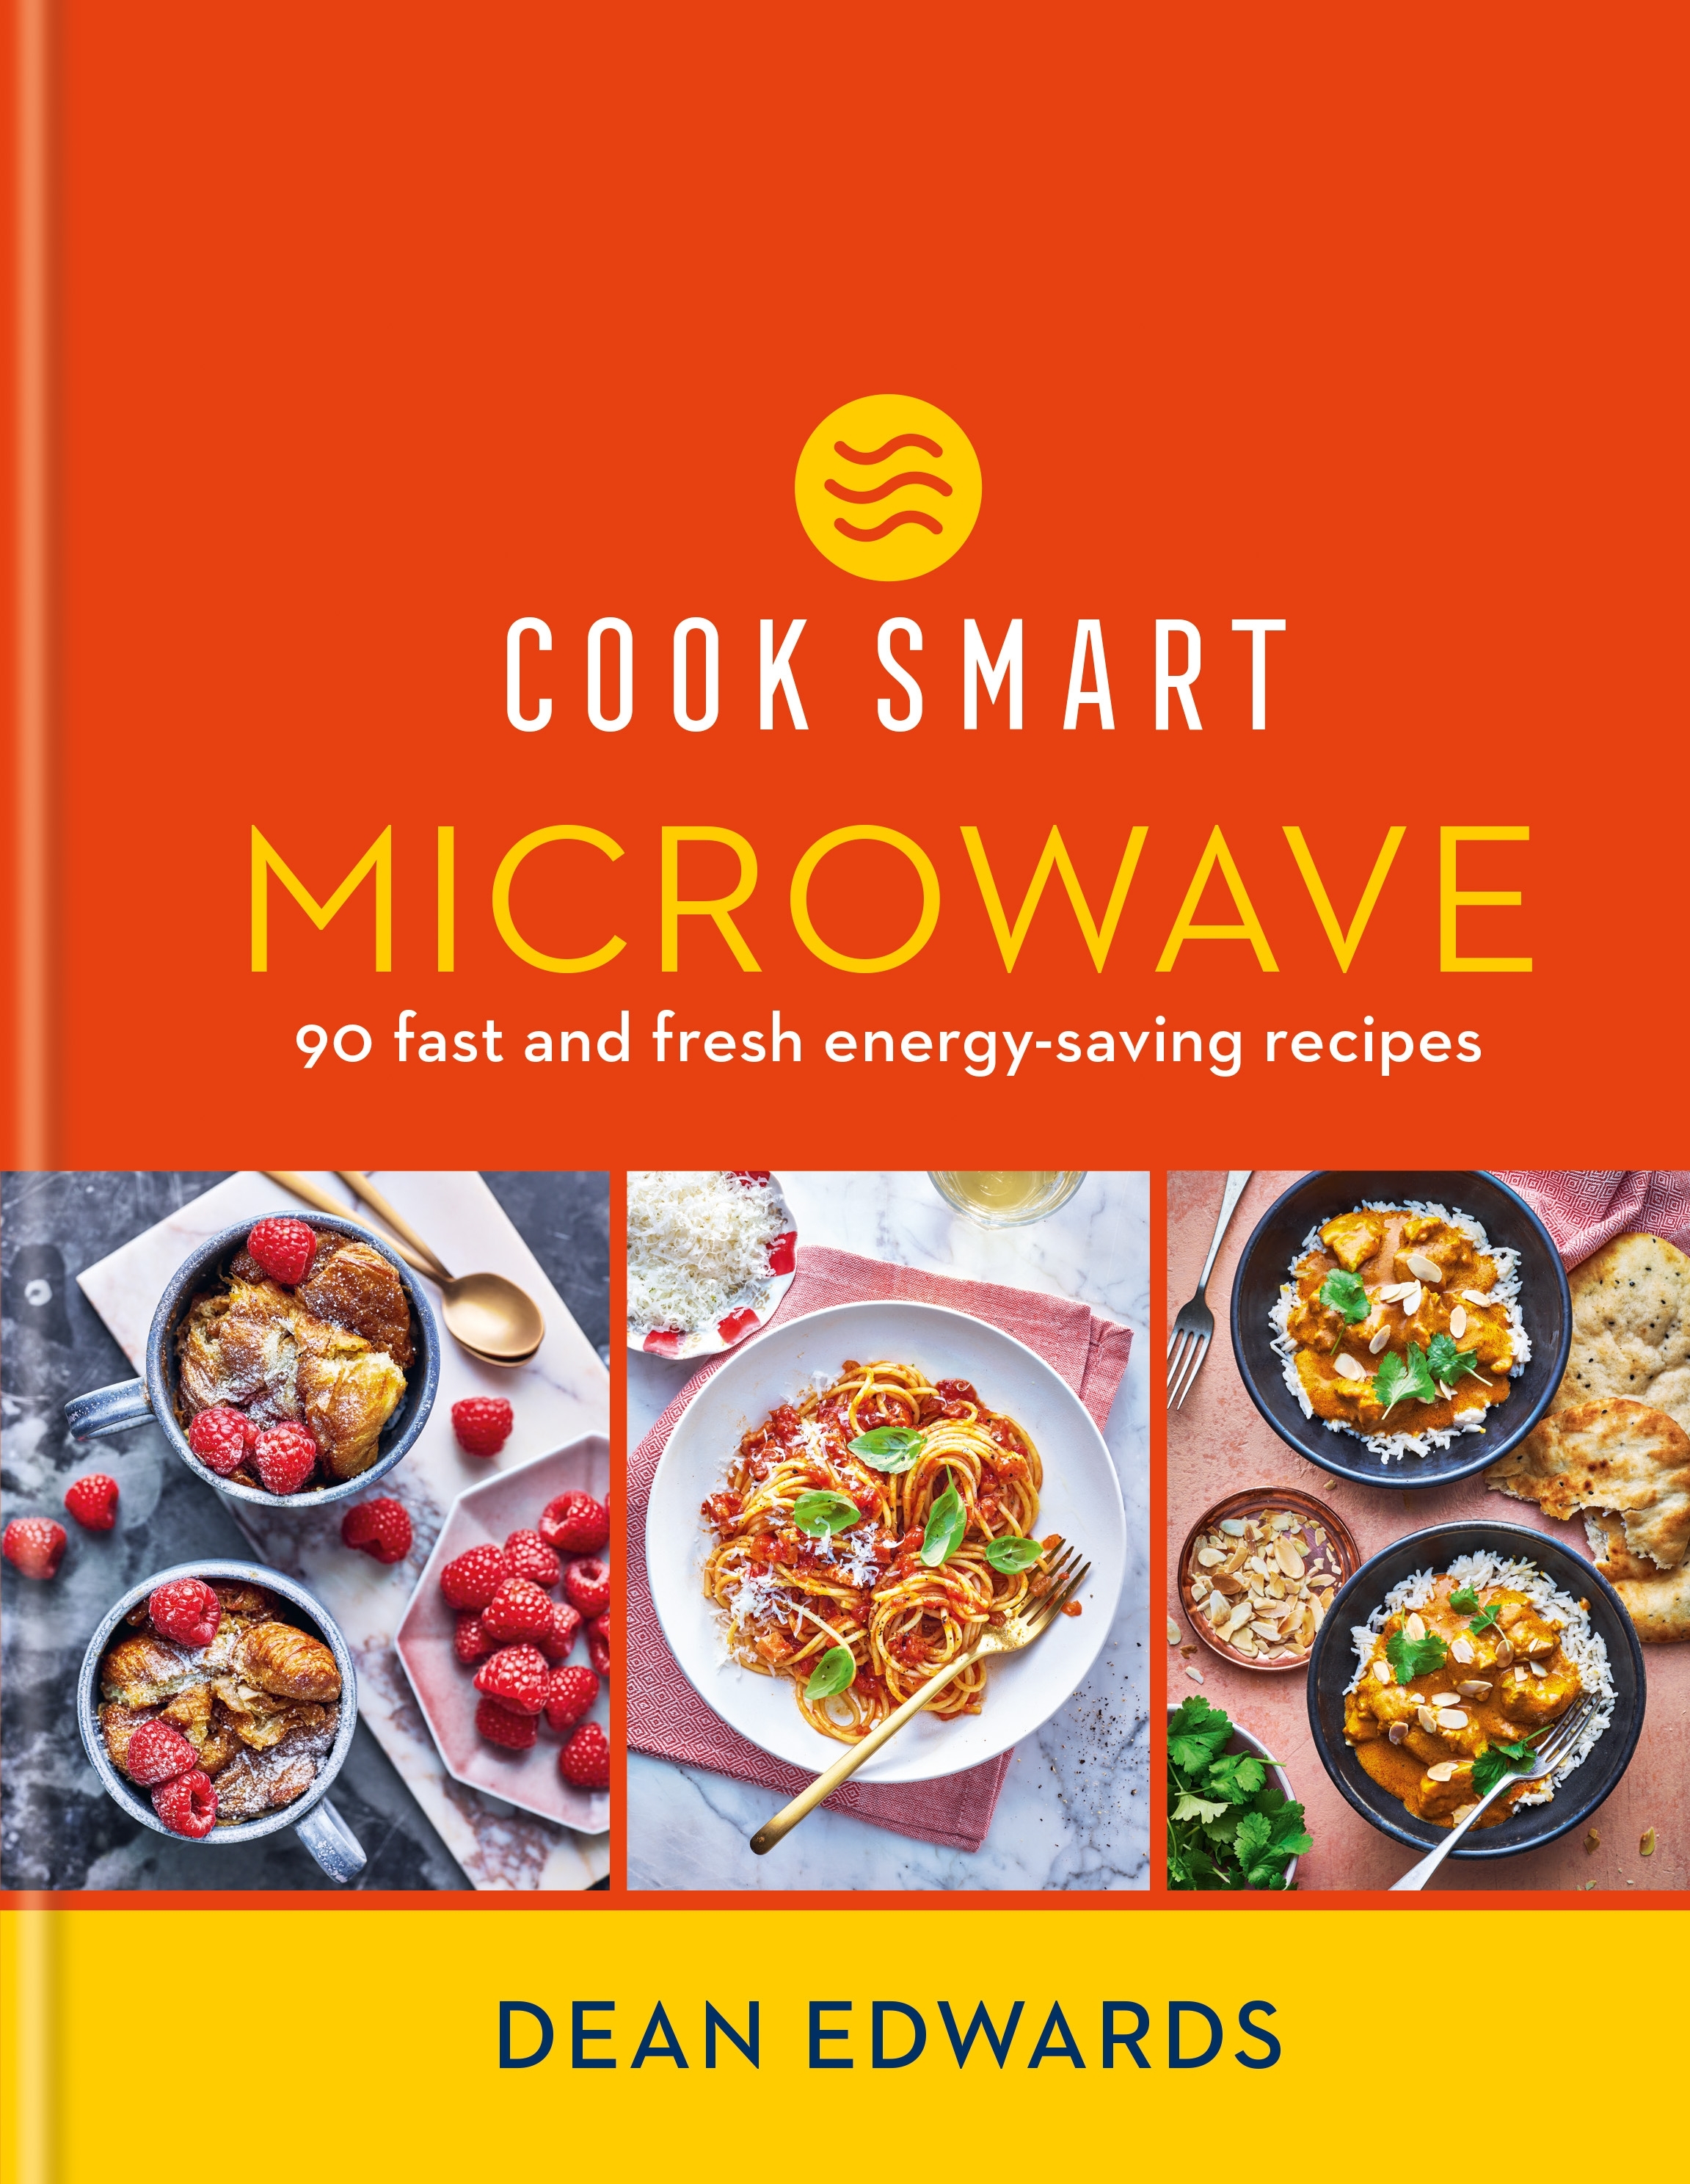 Lebensmittelredakteurin Kirsty Spence präsentiert Ihnen fünf köstliche Ideen aus dem Rezeptbuch Cook Smart: Microwave